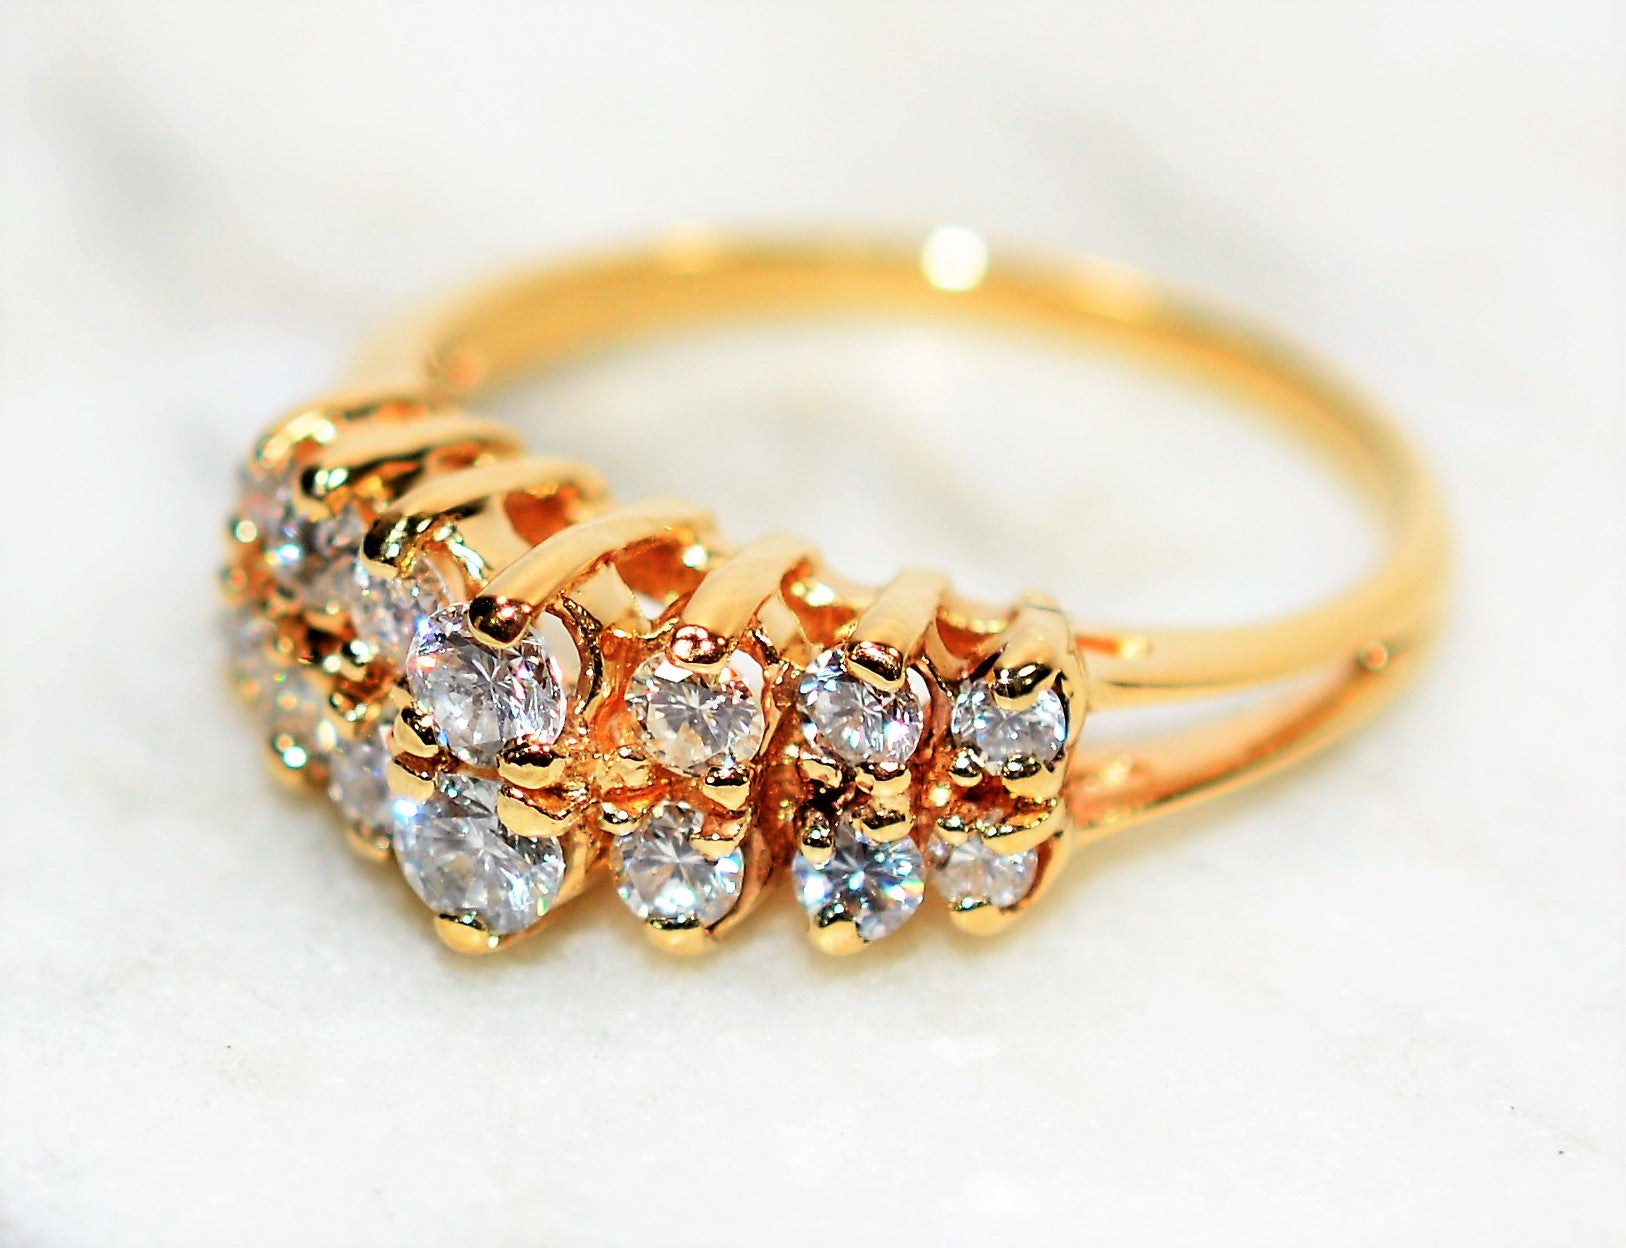 Natural Diamond Ring 14K Solid Gold .58tcw Cluster Ring Cocktail Ring Vintage Ring Estate Ring Statement Ring Ladies Ring Women's Ring Fine